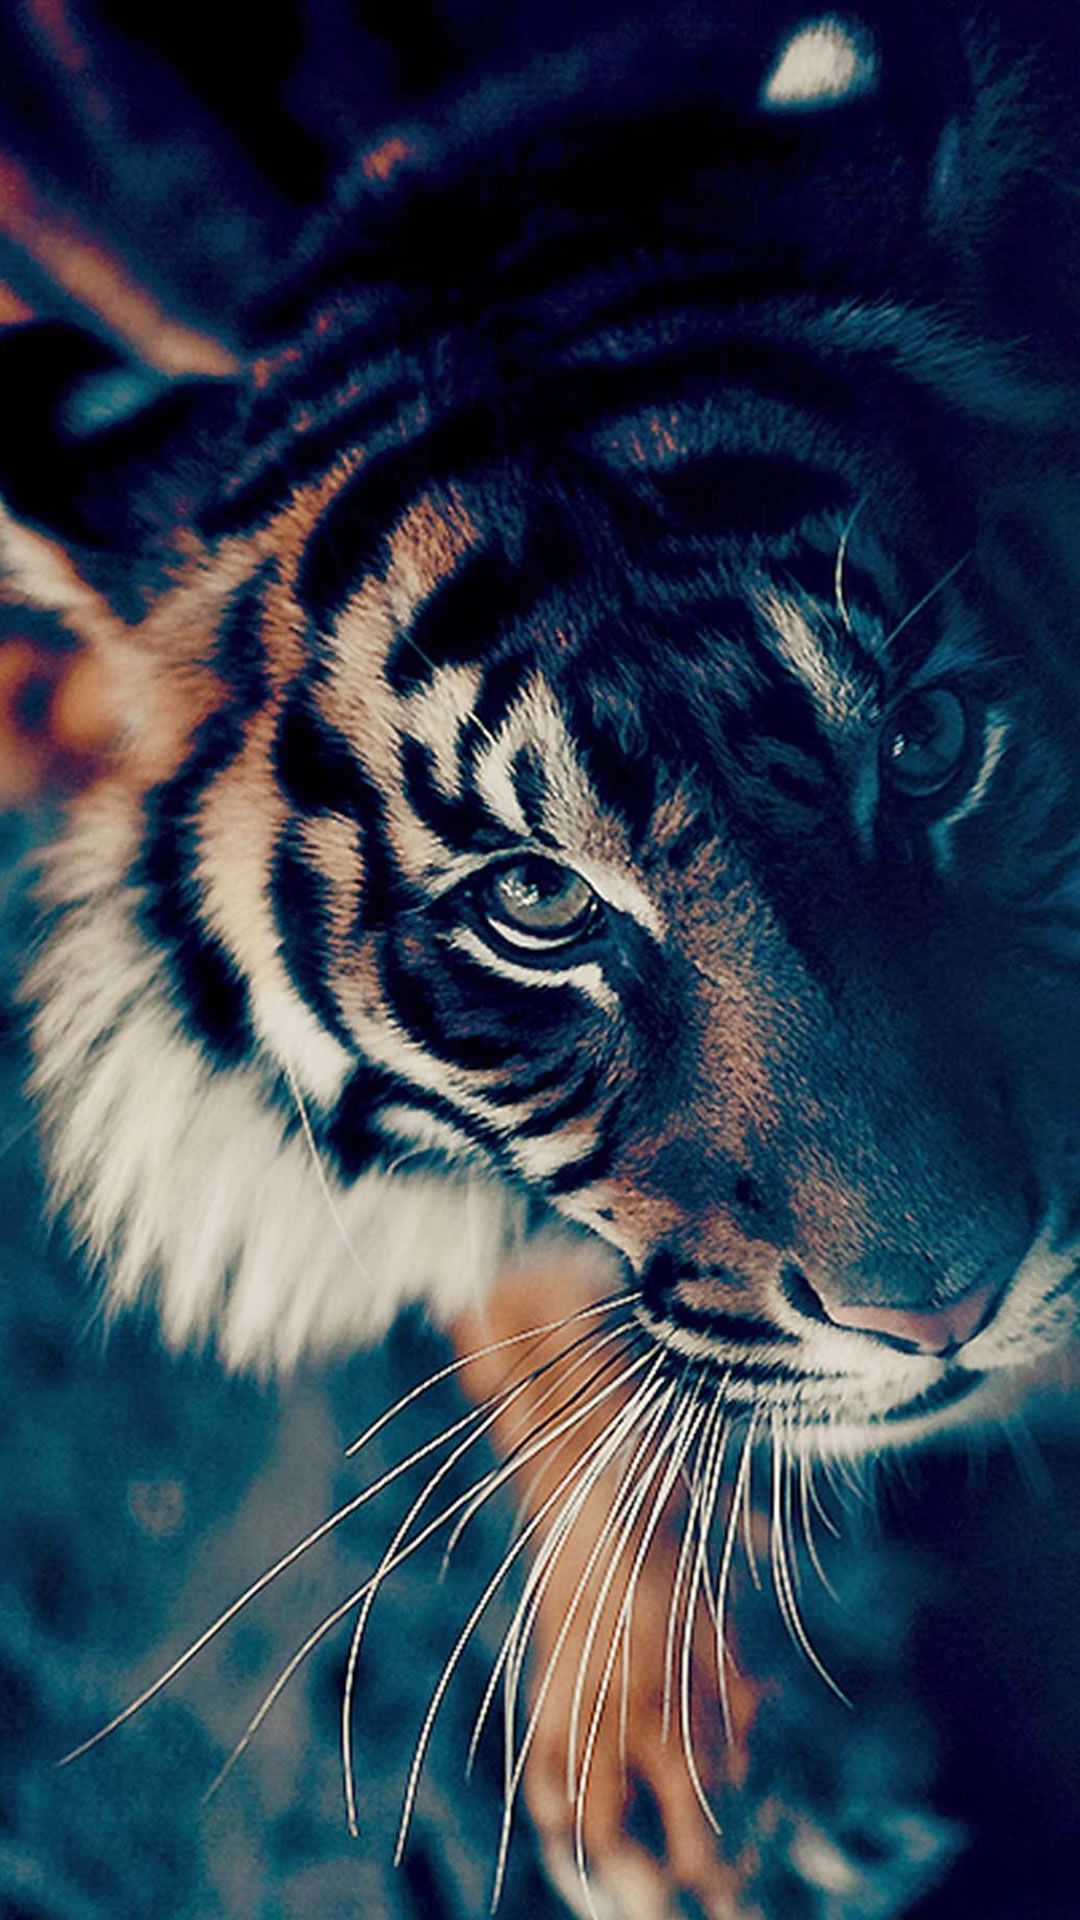 Bengal Tiger Closeup IPhone 6 Wallpaper Download. IPhone Wallpaper, IPad Wallpaper One Stop Download. Tiger Wallpaper, Animals, Animal Wallpaper